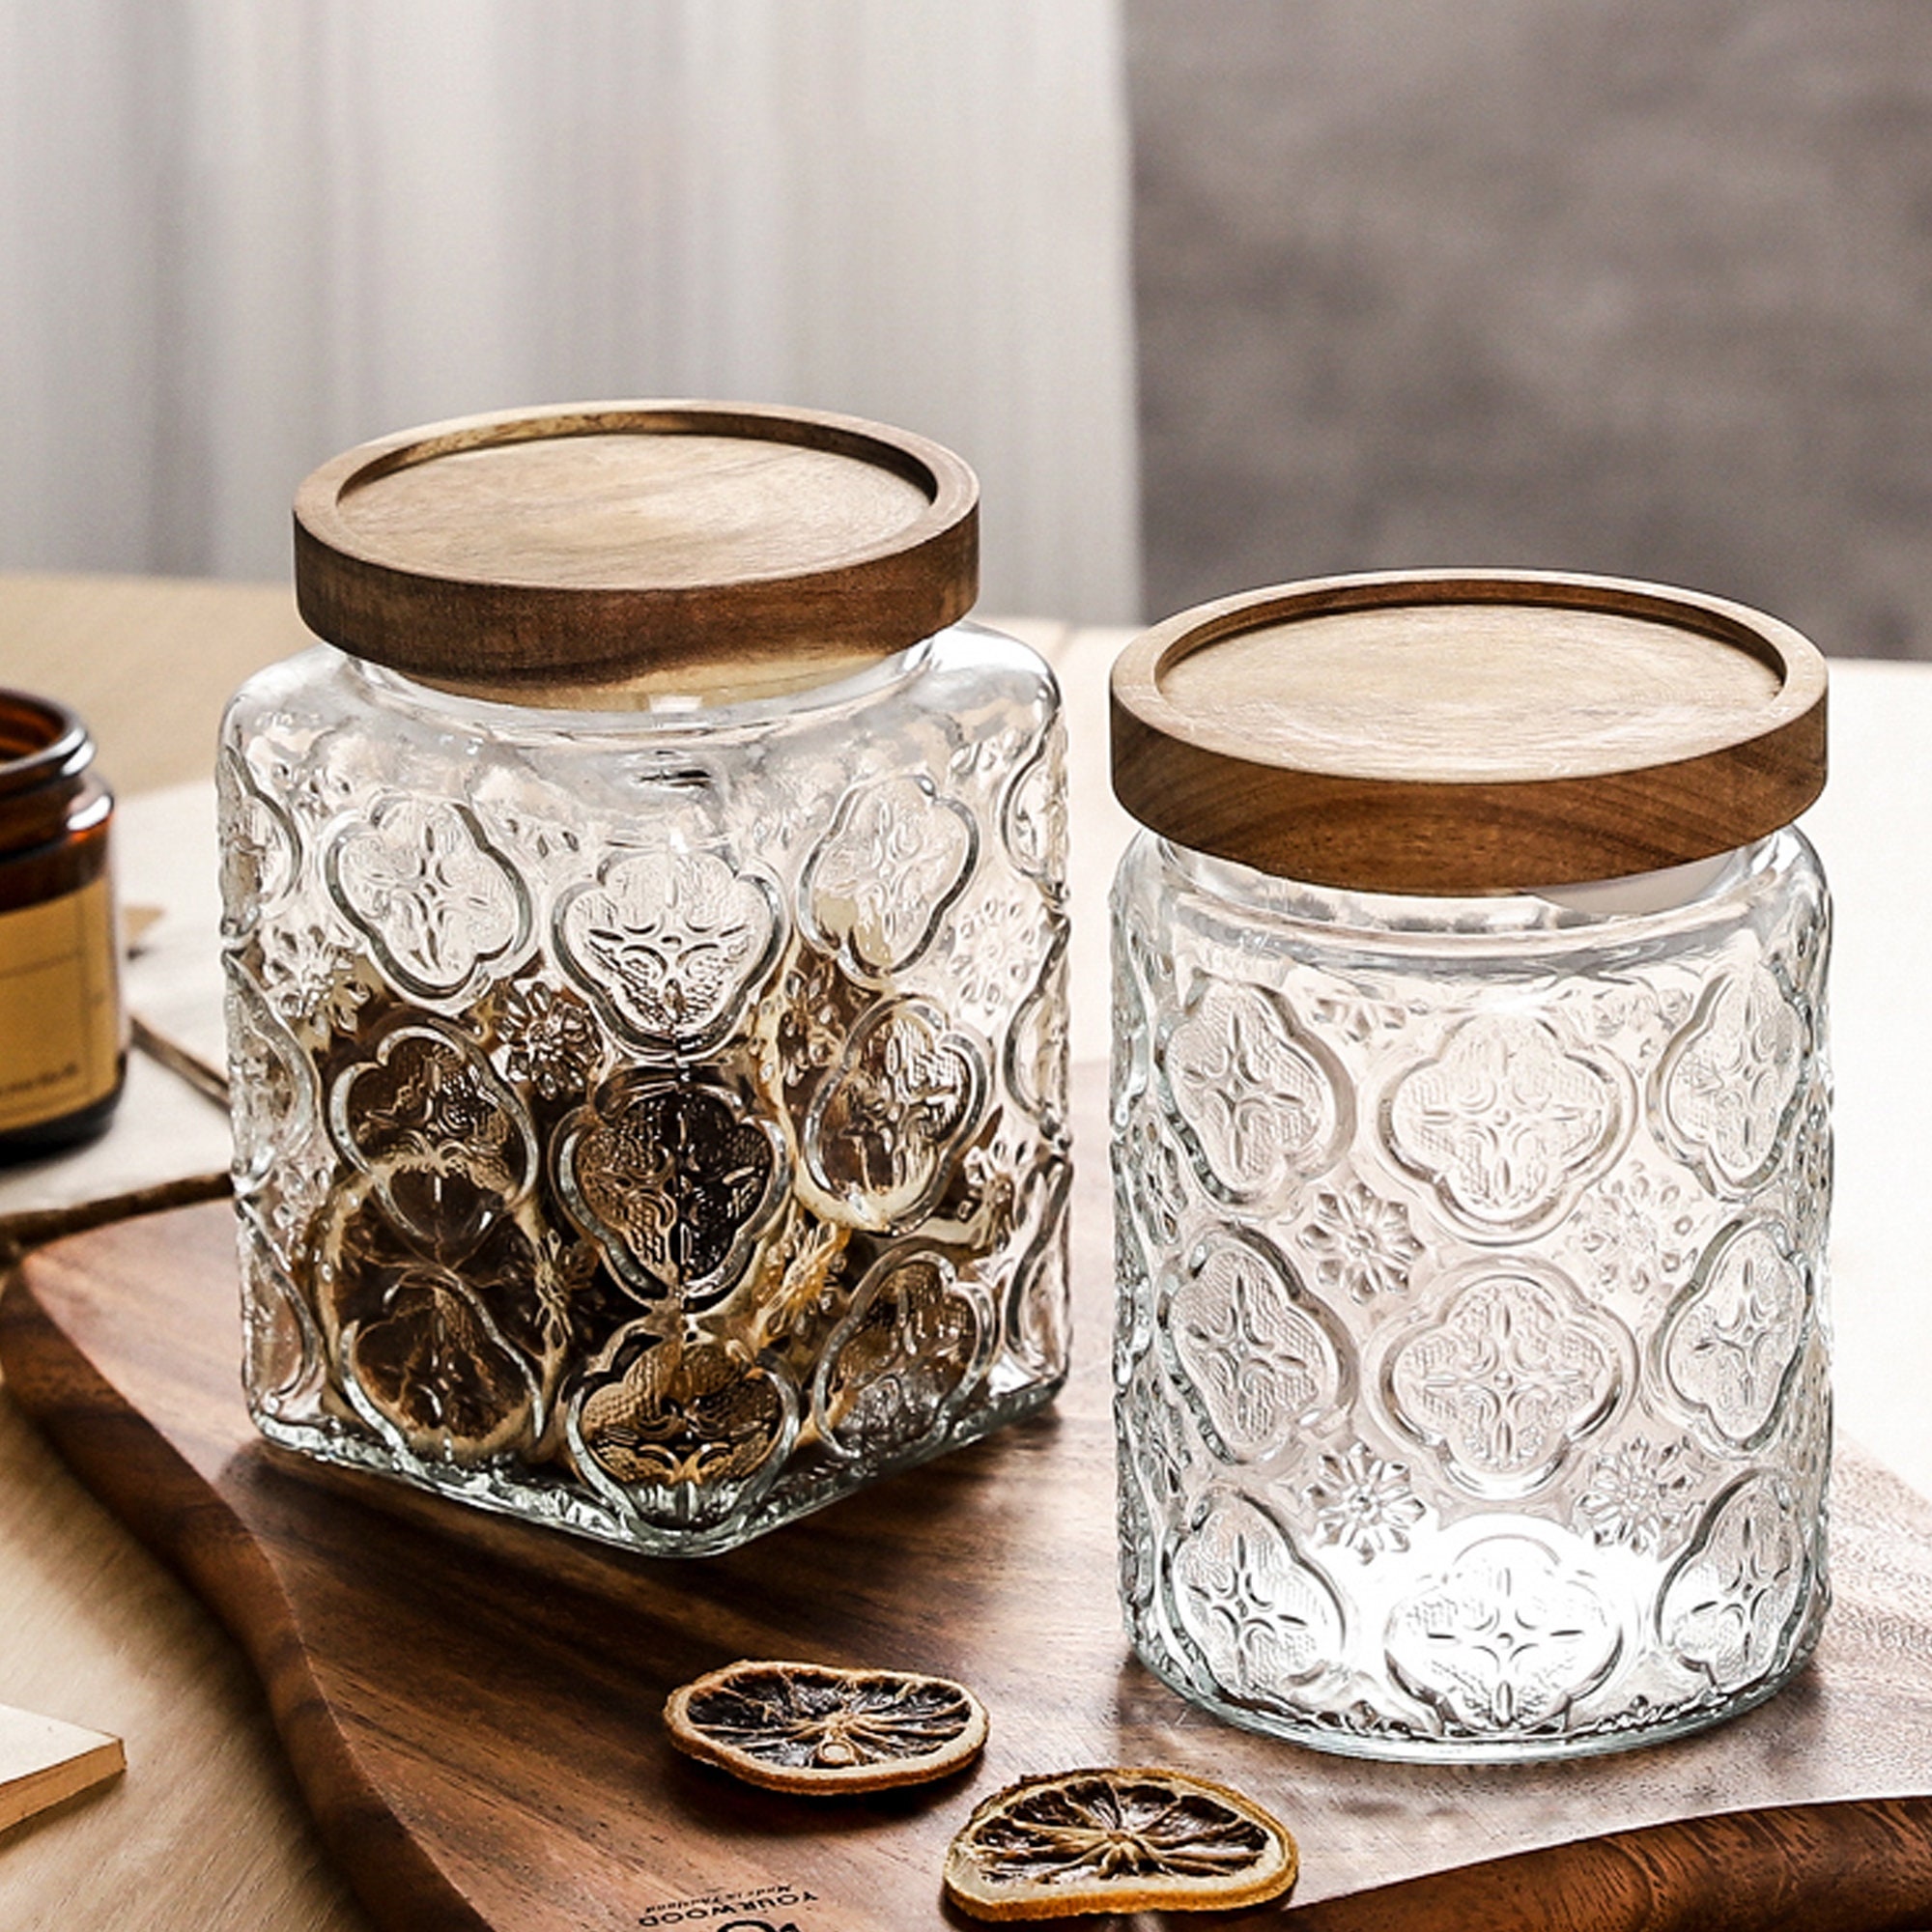 Glass Jar with Bamboo Lids Urban Green, Spice Jar Set 20pcs, Glass